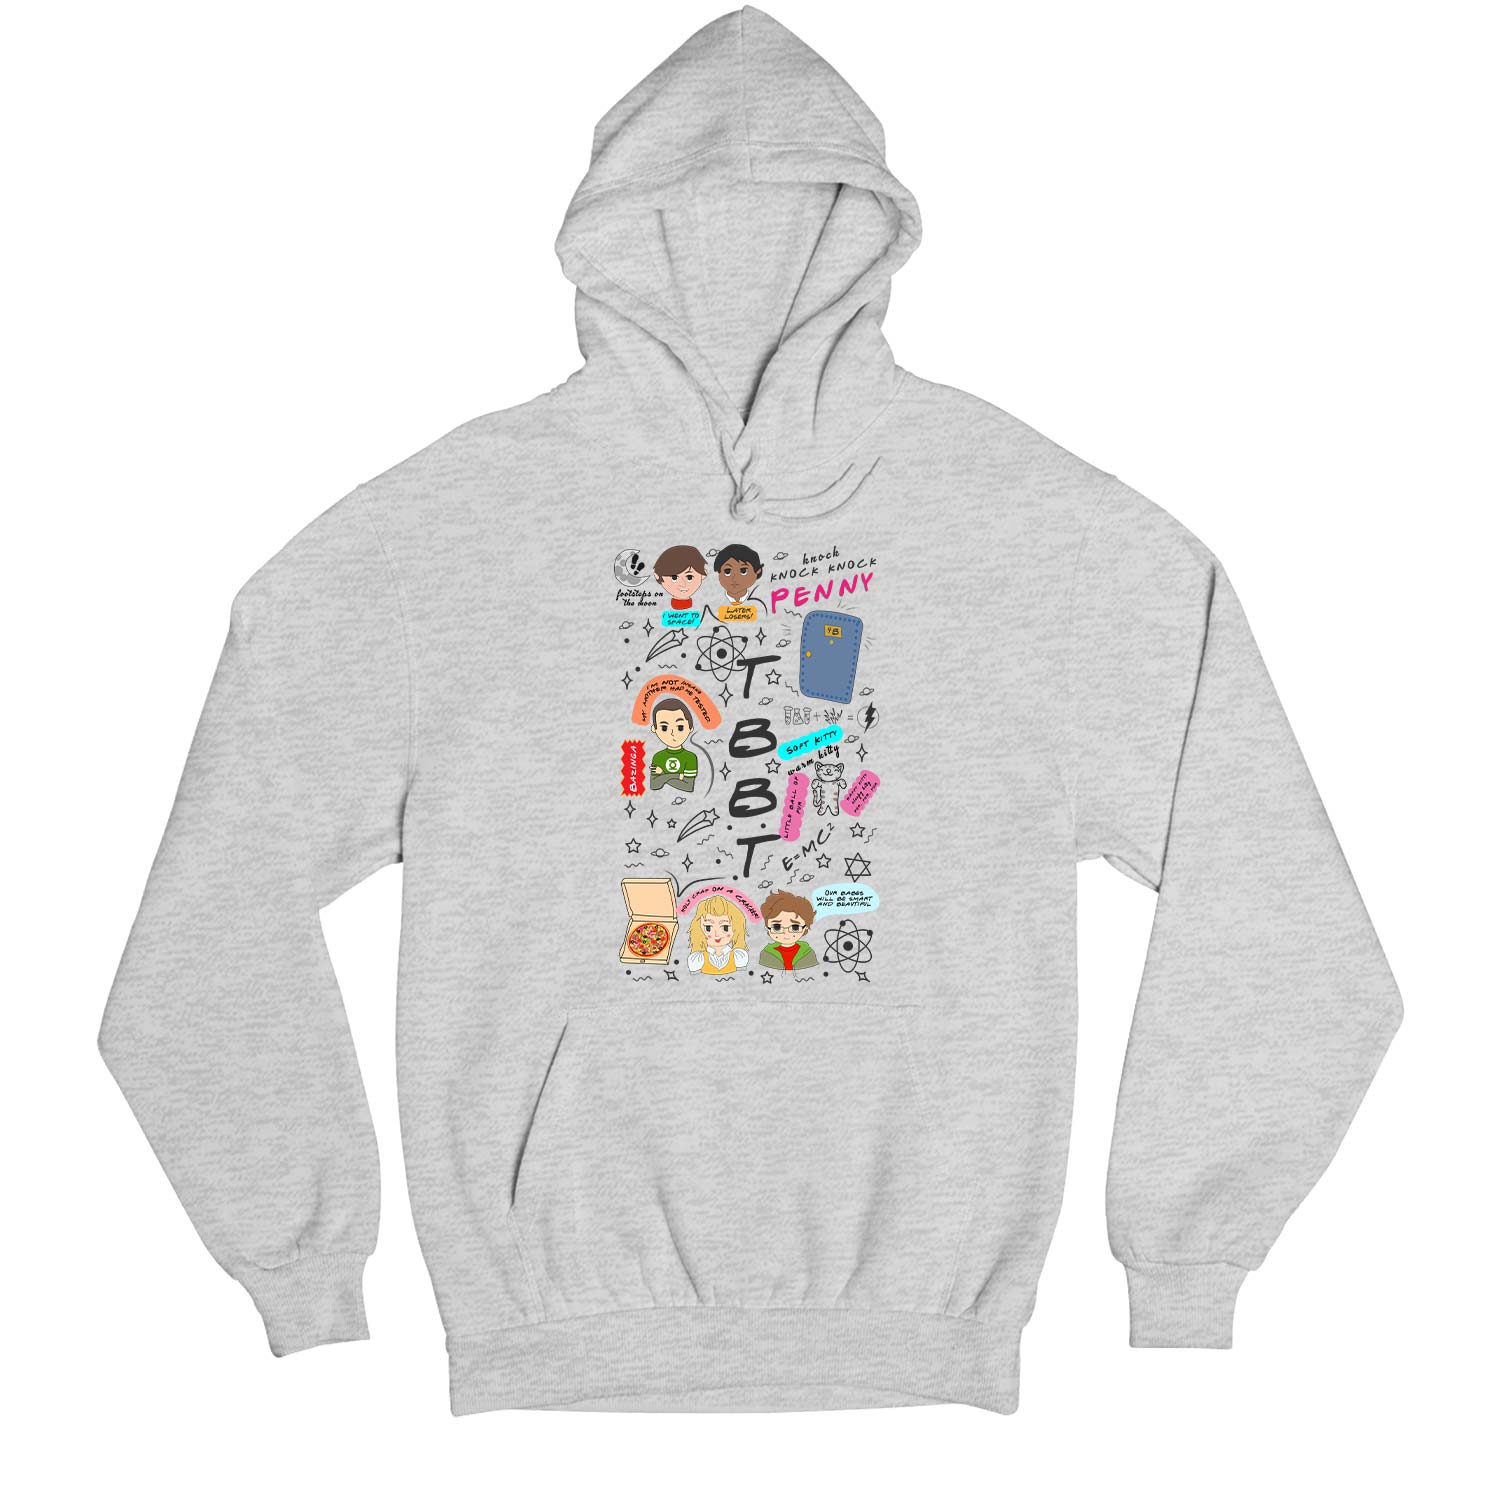 The Big Bang Theory Hoodie - Hoodie Hooded Sweatshirt The Banyan Tee TBT